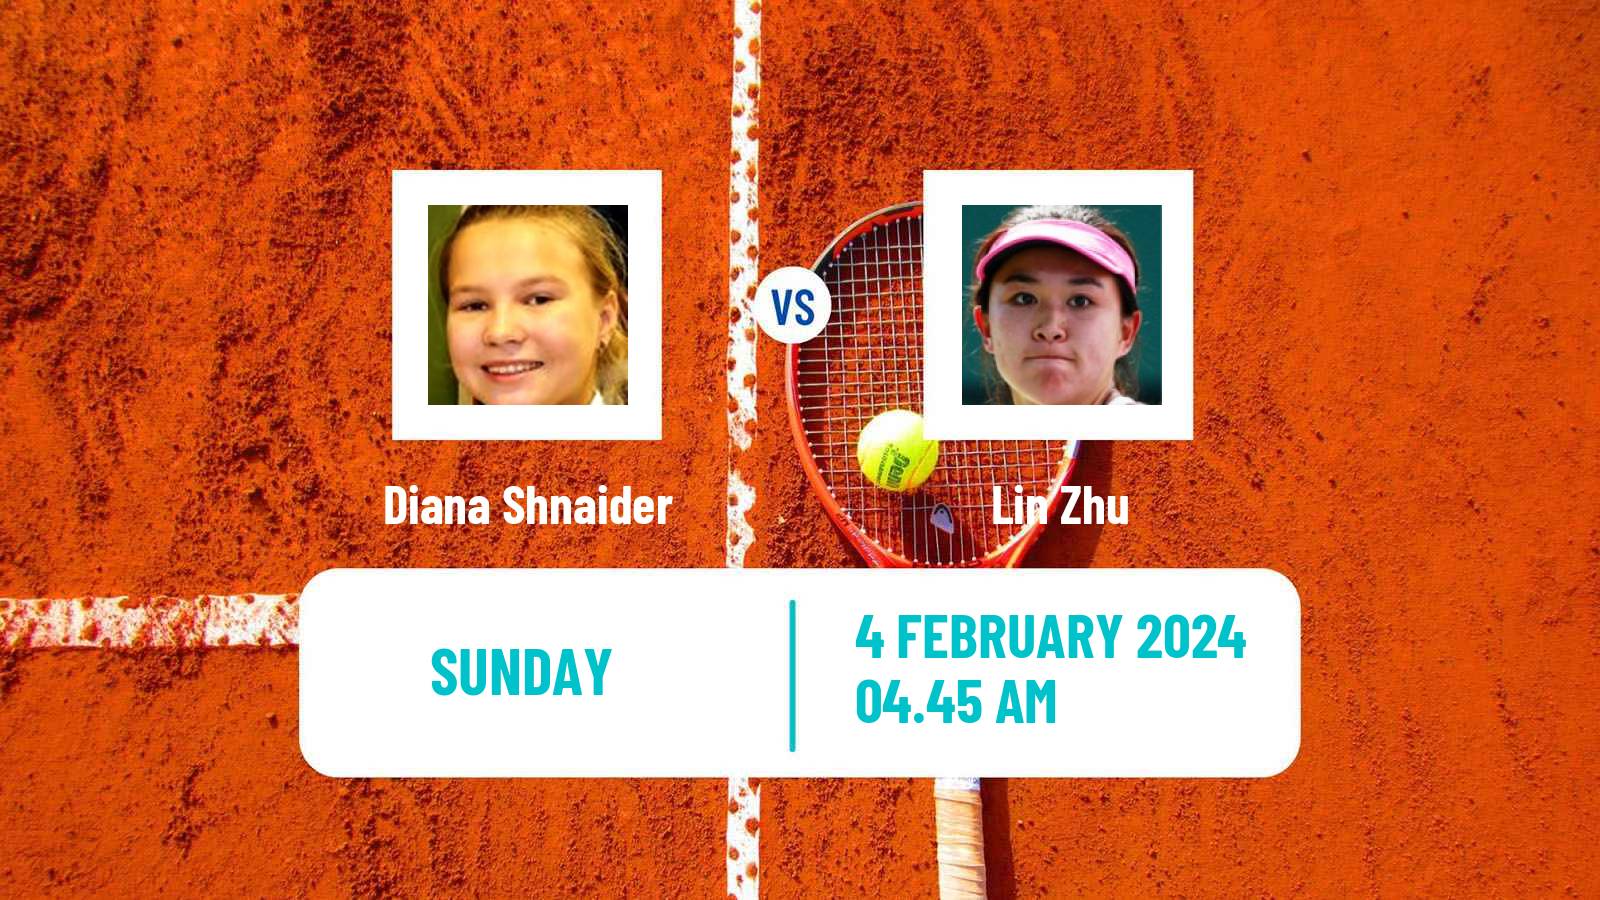 Tennis WTA Hua Hin Diana Shnaider - Lin Zhu